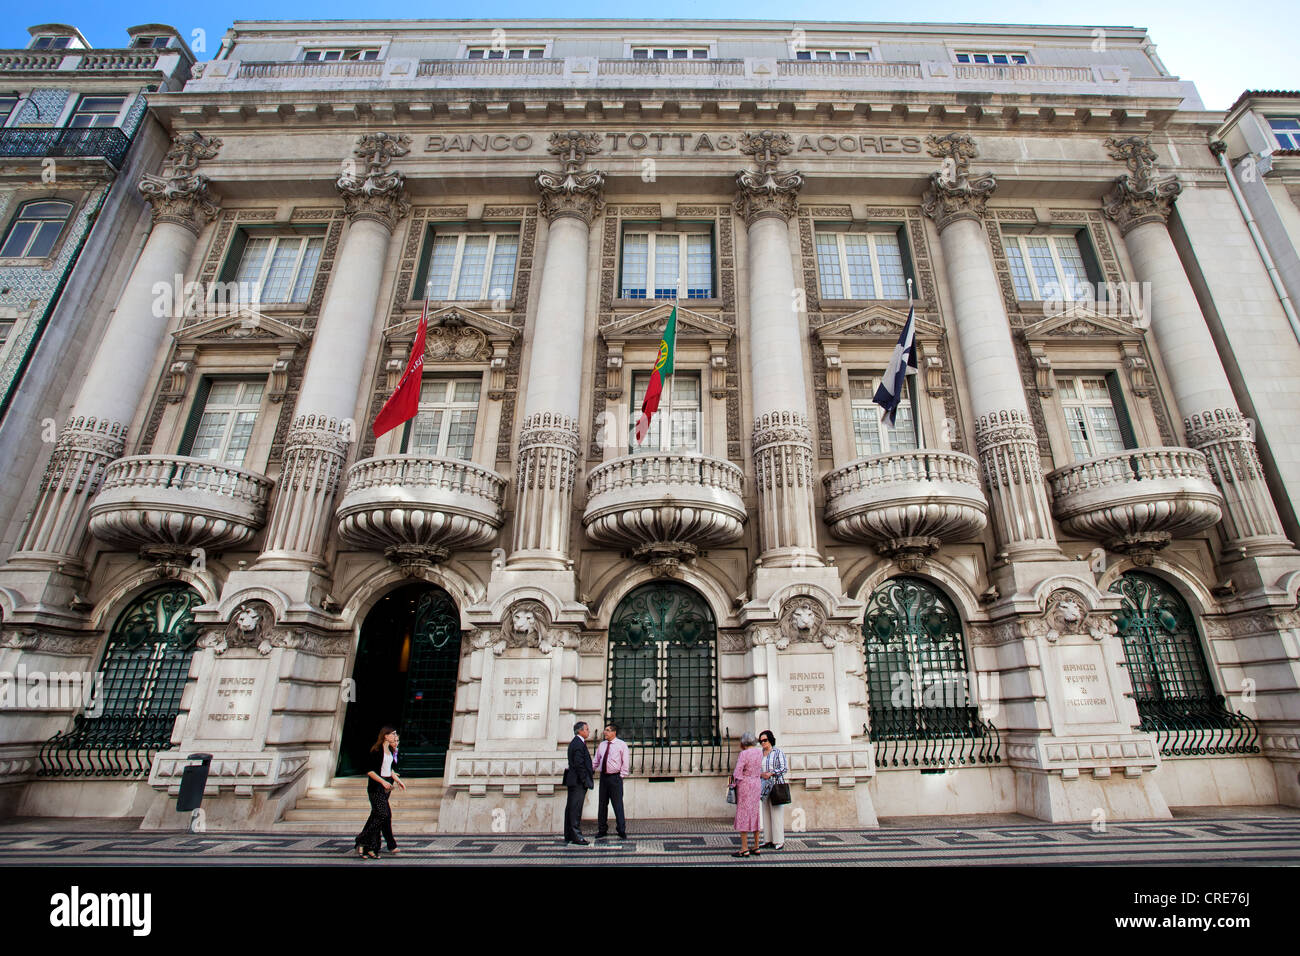 Headquarters of the Portuguese bank Banco Totta Acores, BTA, in Lisbon, Portugal, Europe Stock Photo